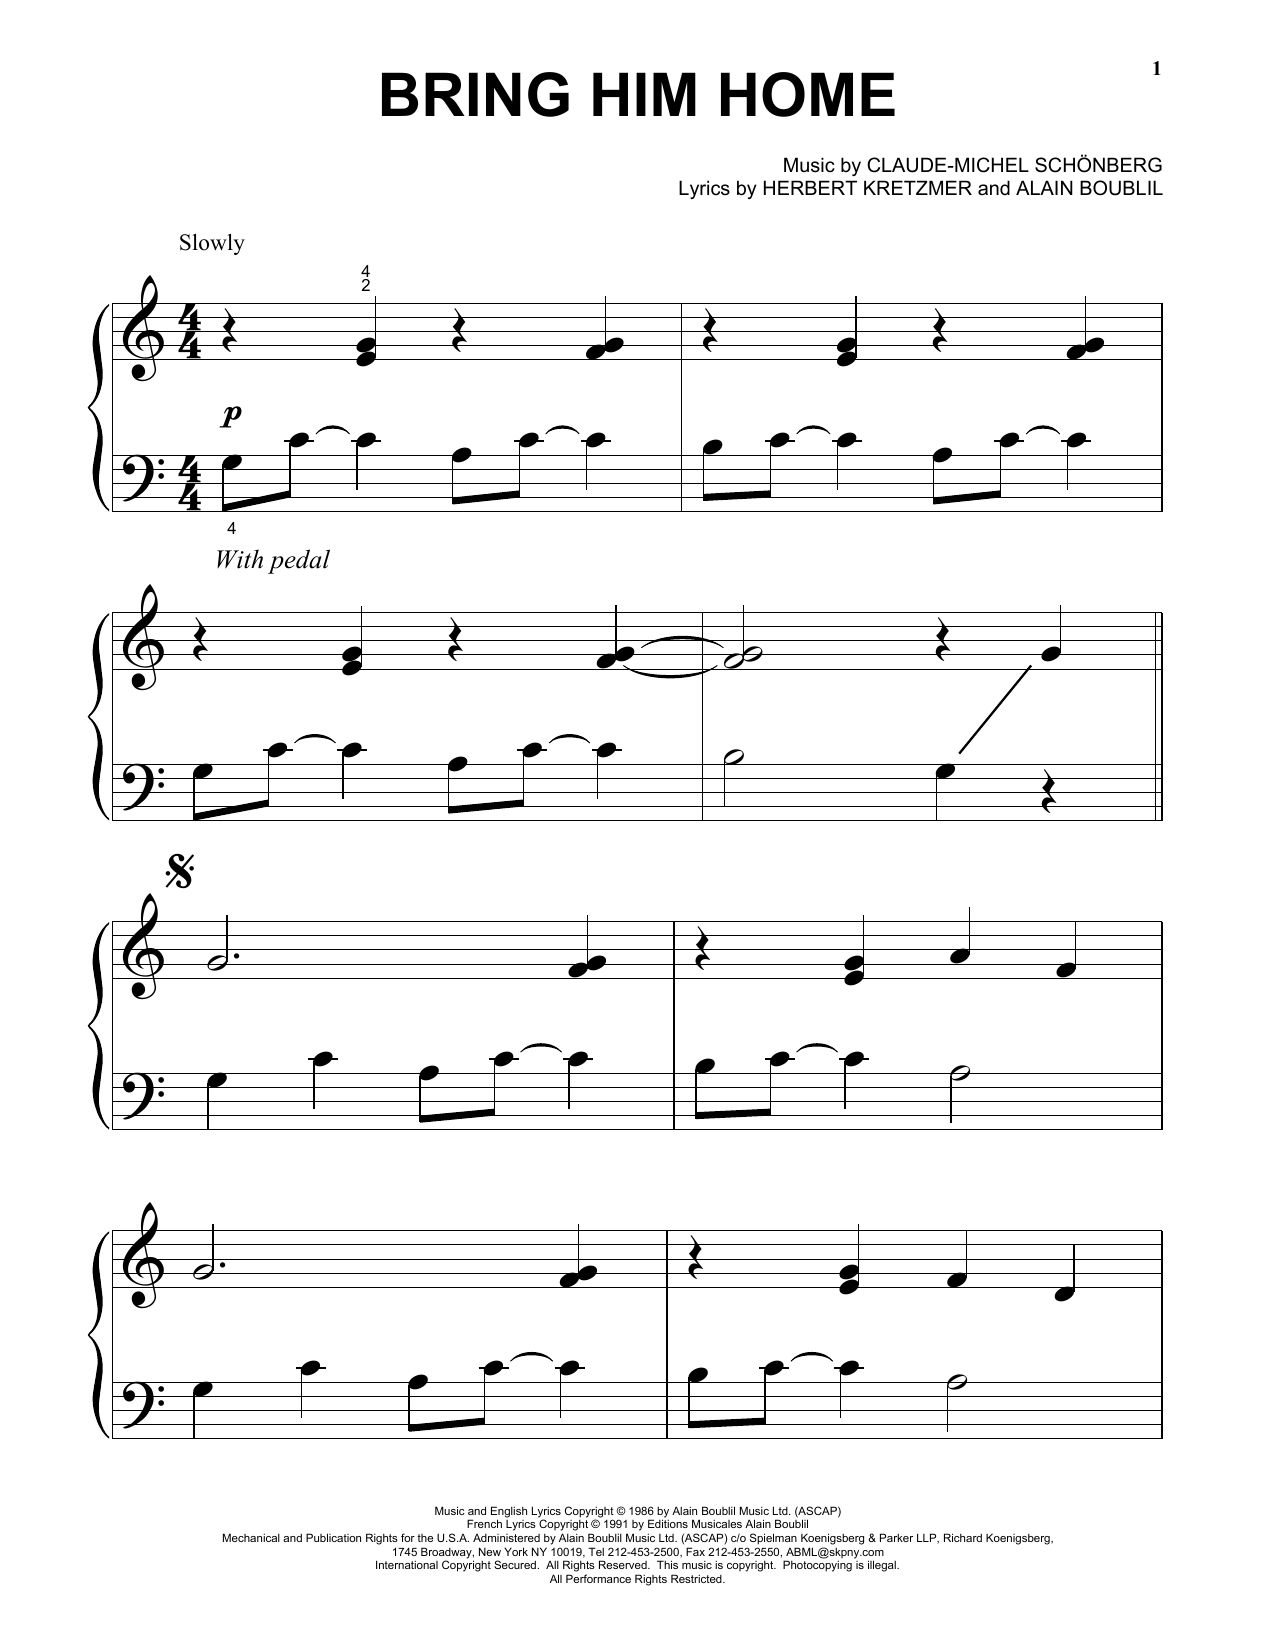 Claude-Michel Schönberg Bring Him Home Sheet Music Notes & Chords for Clarinet Duet - Download or Print PDF